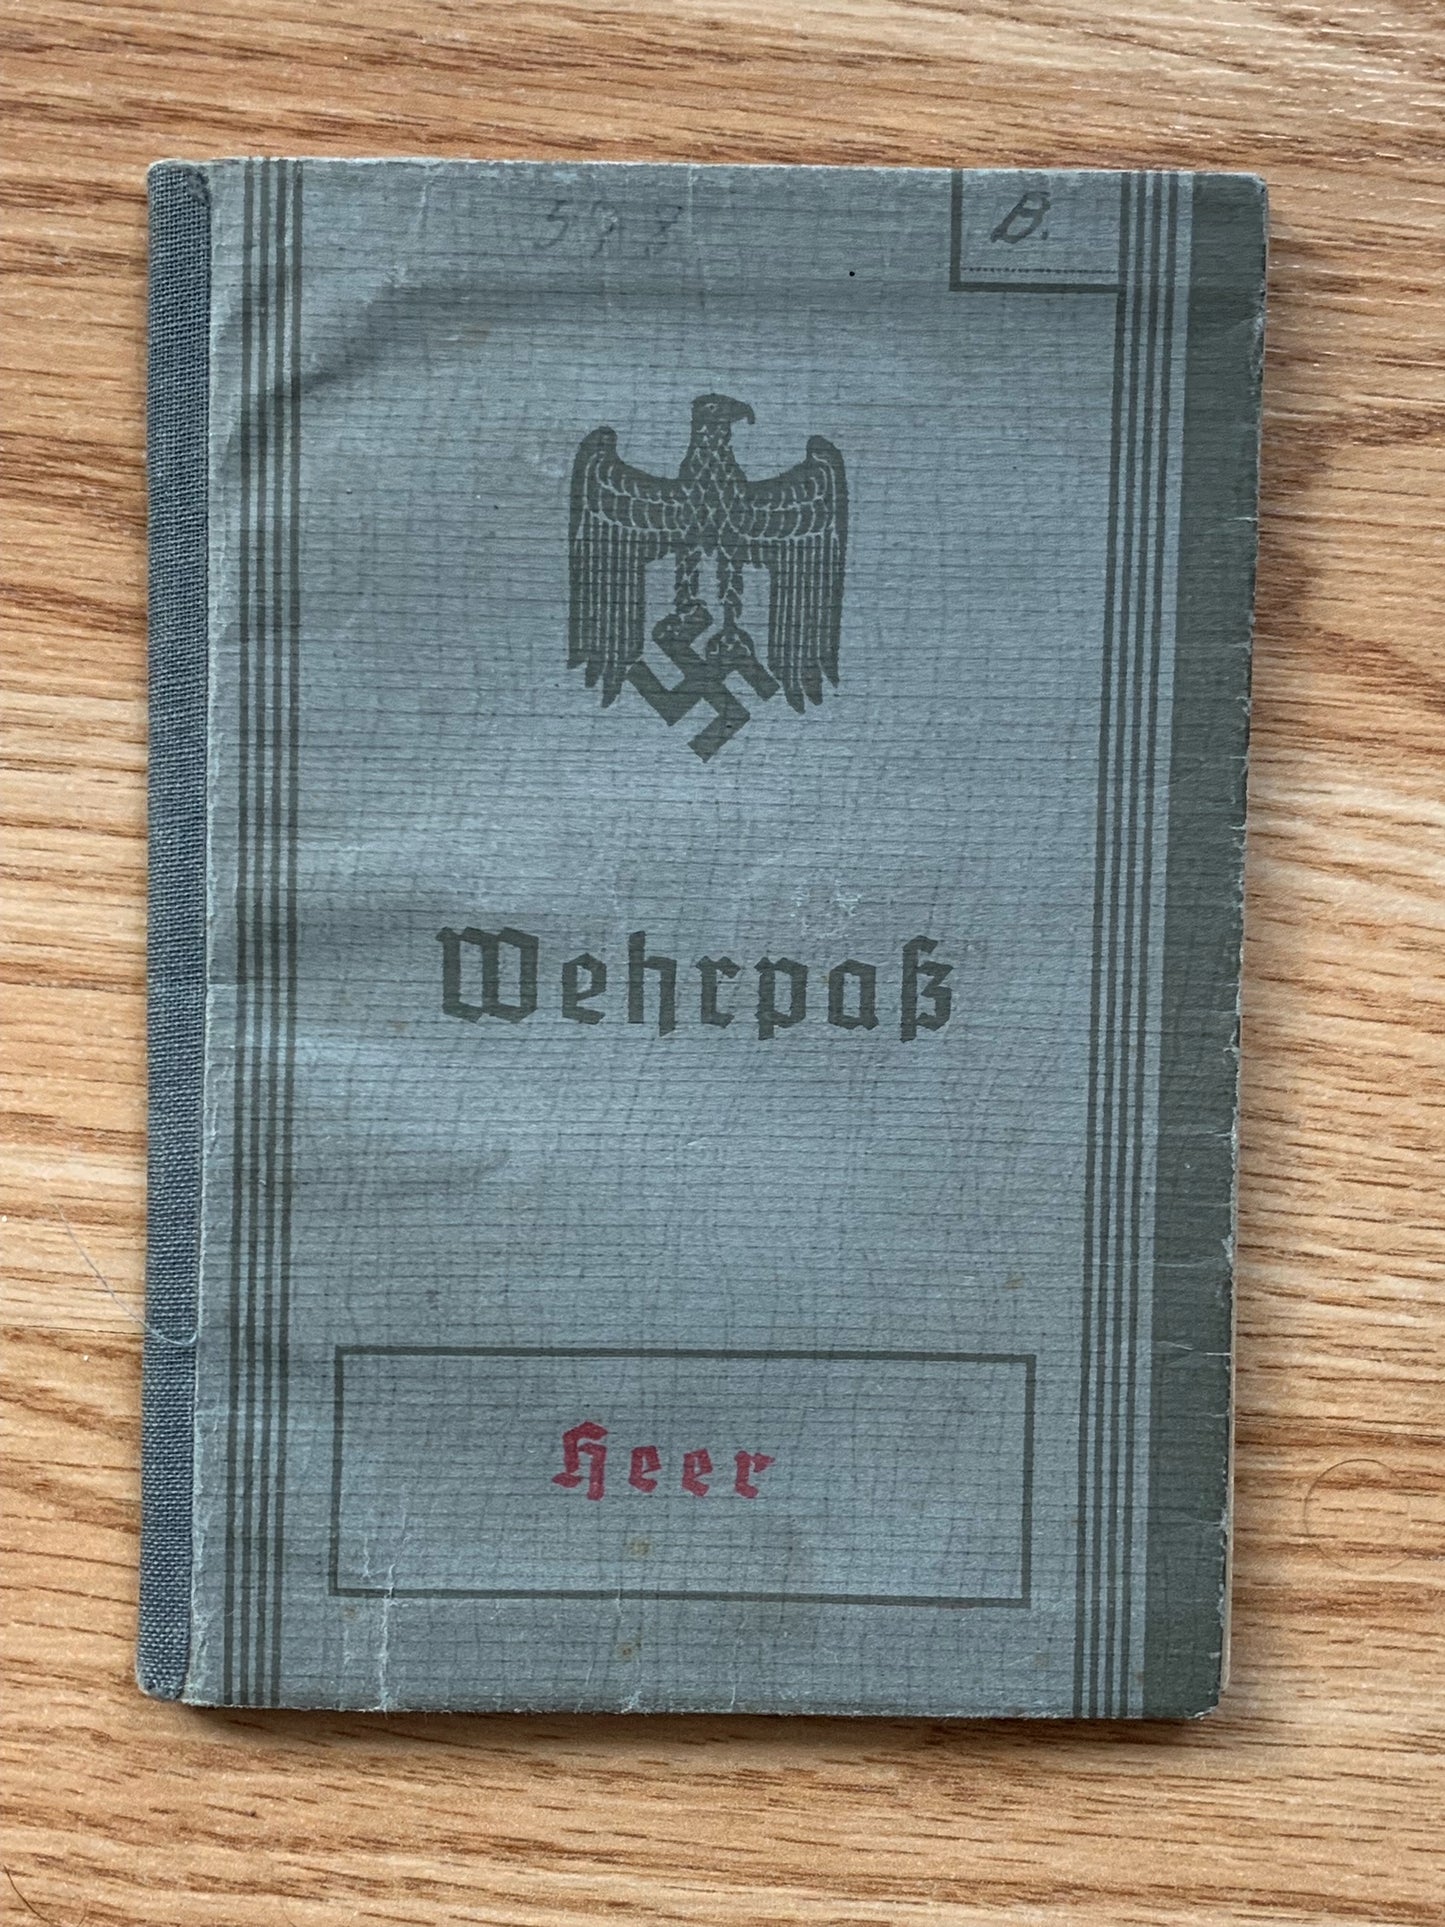 Wehrpass - WW1 decorated veteran